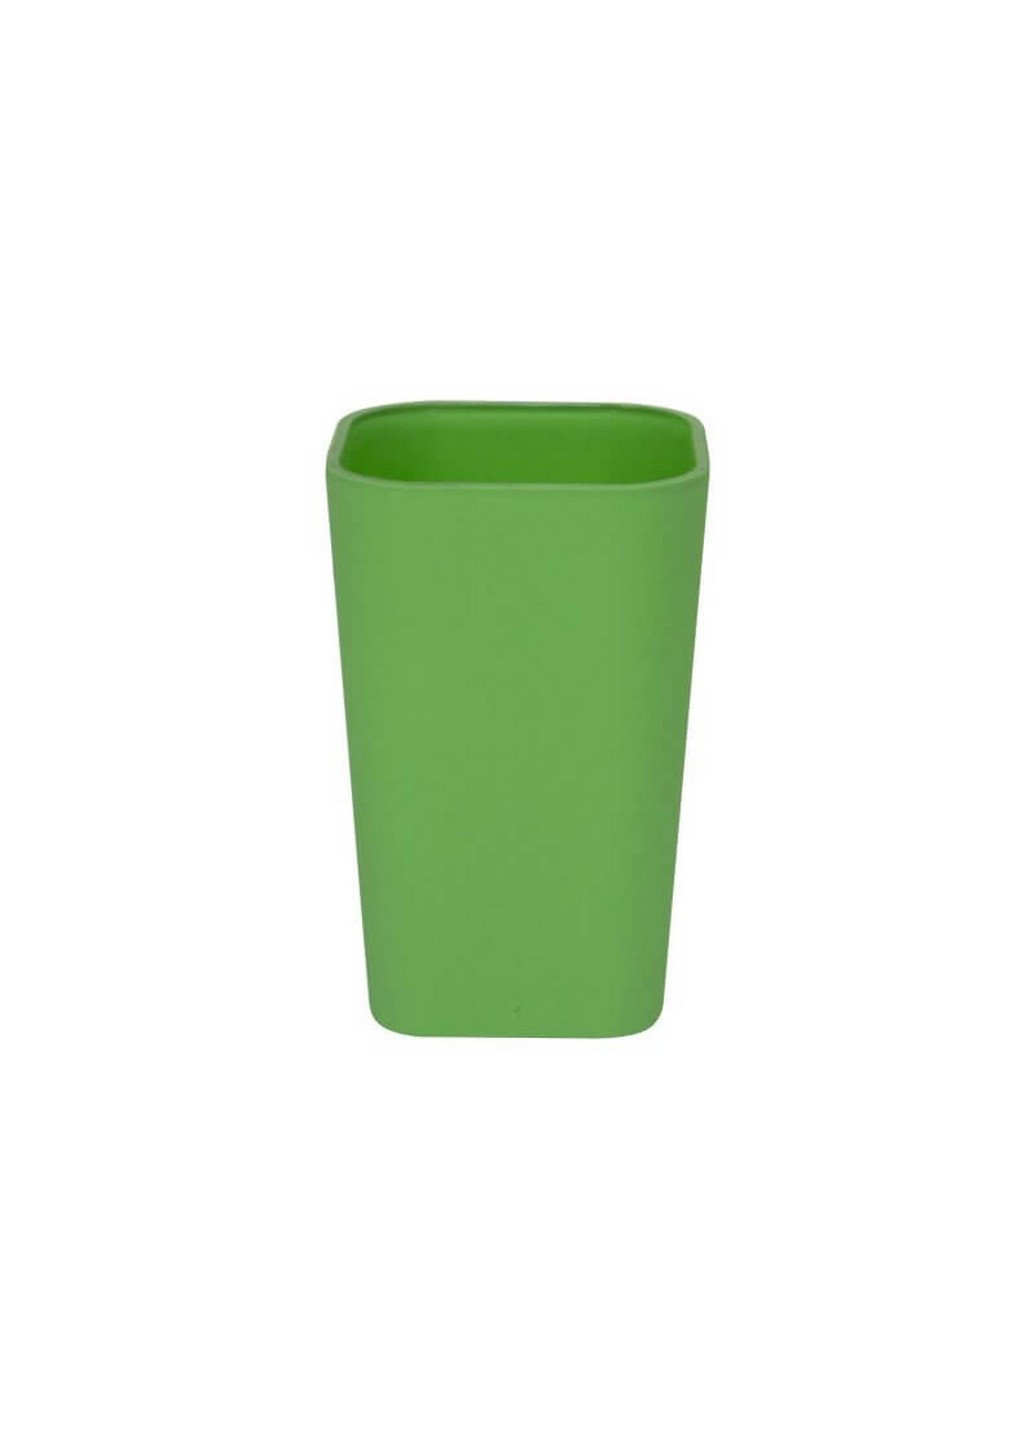 Склянка зелена Trento Aquaform 7.3*7.3*11.1 Trento Design Studio (191027684)